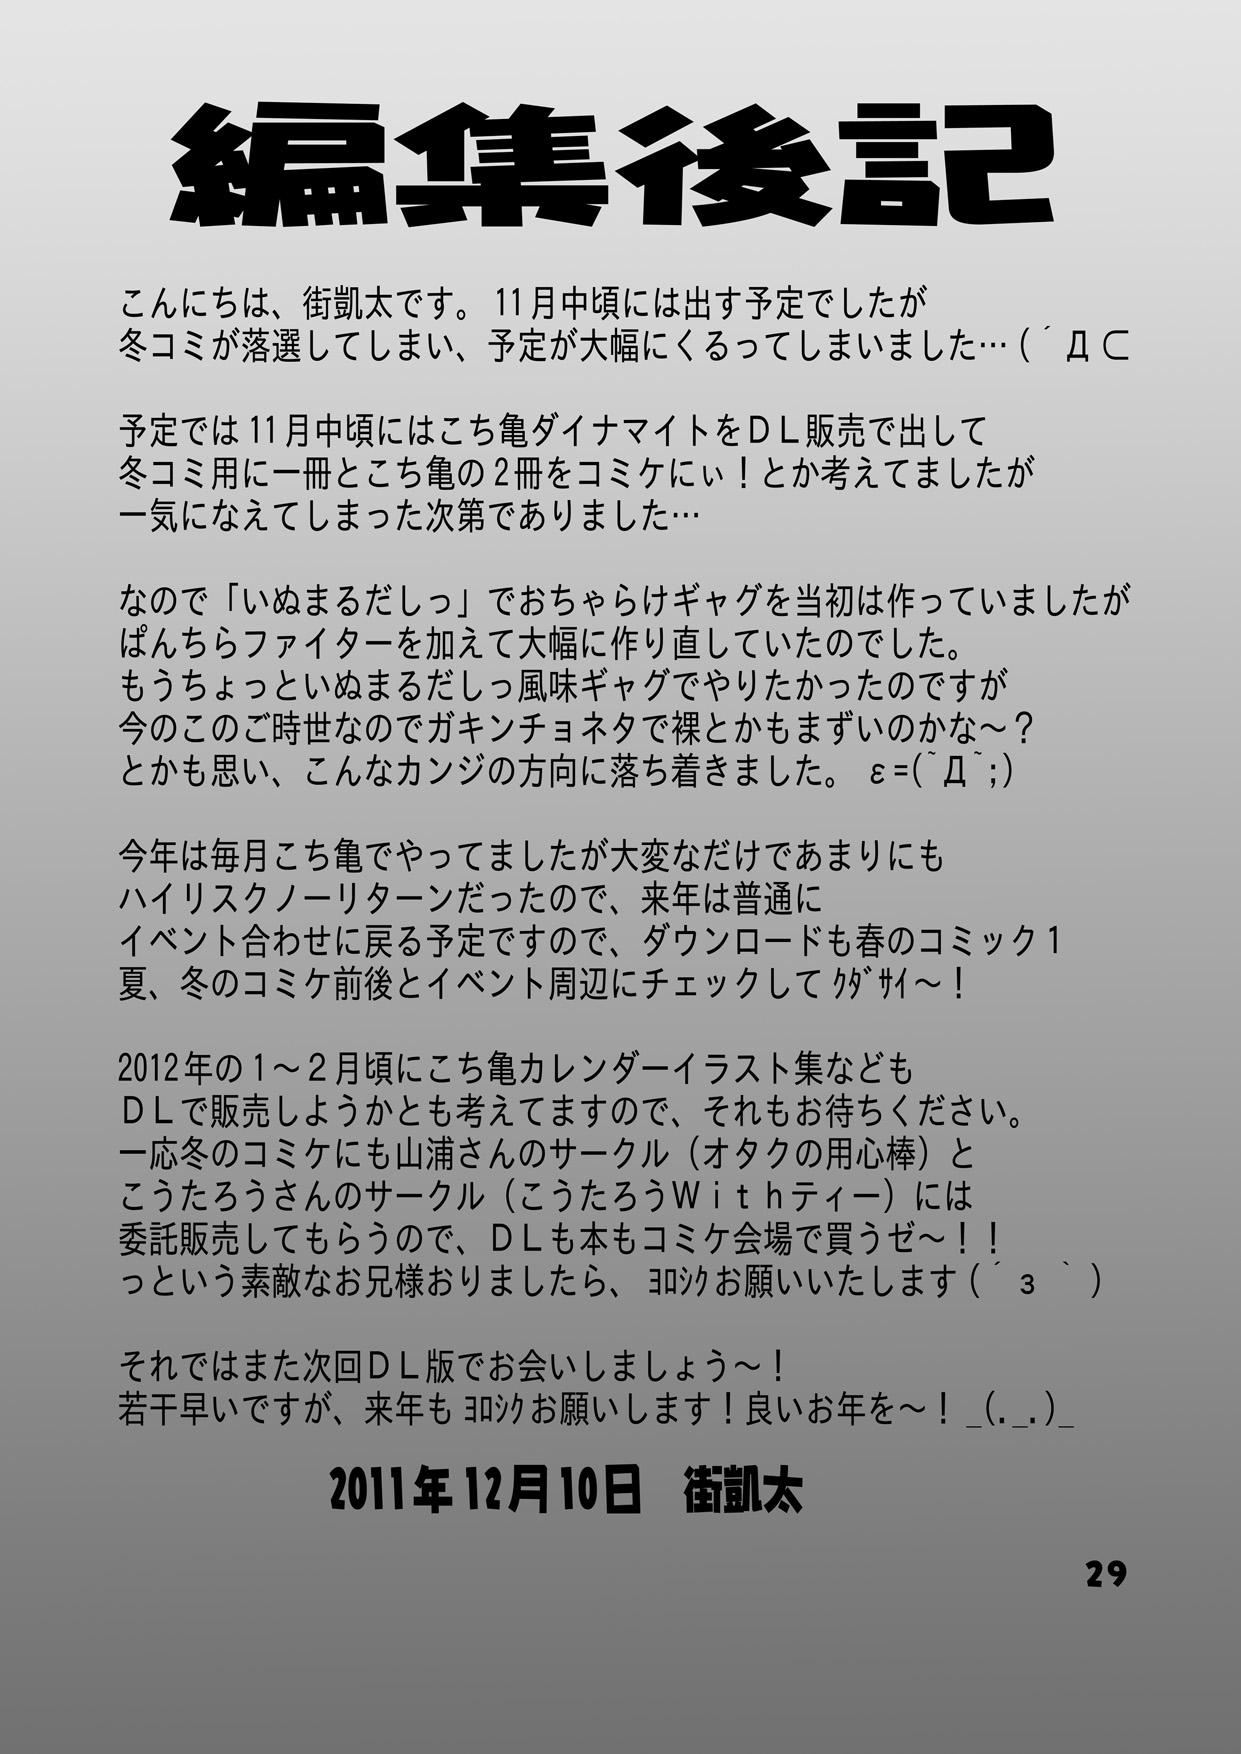 Young Tits Maitsuki ko chi Kame Dainamaito vol.5 - Kochikame Monster - Page 29